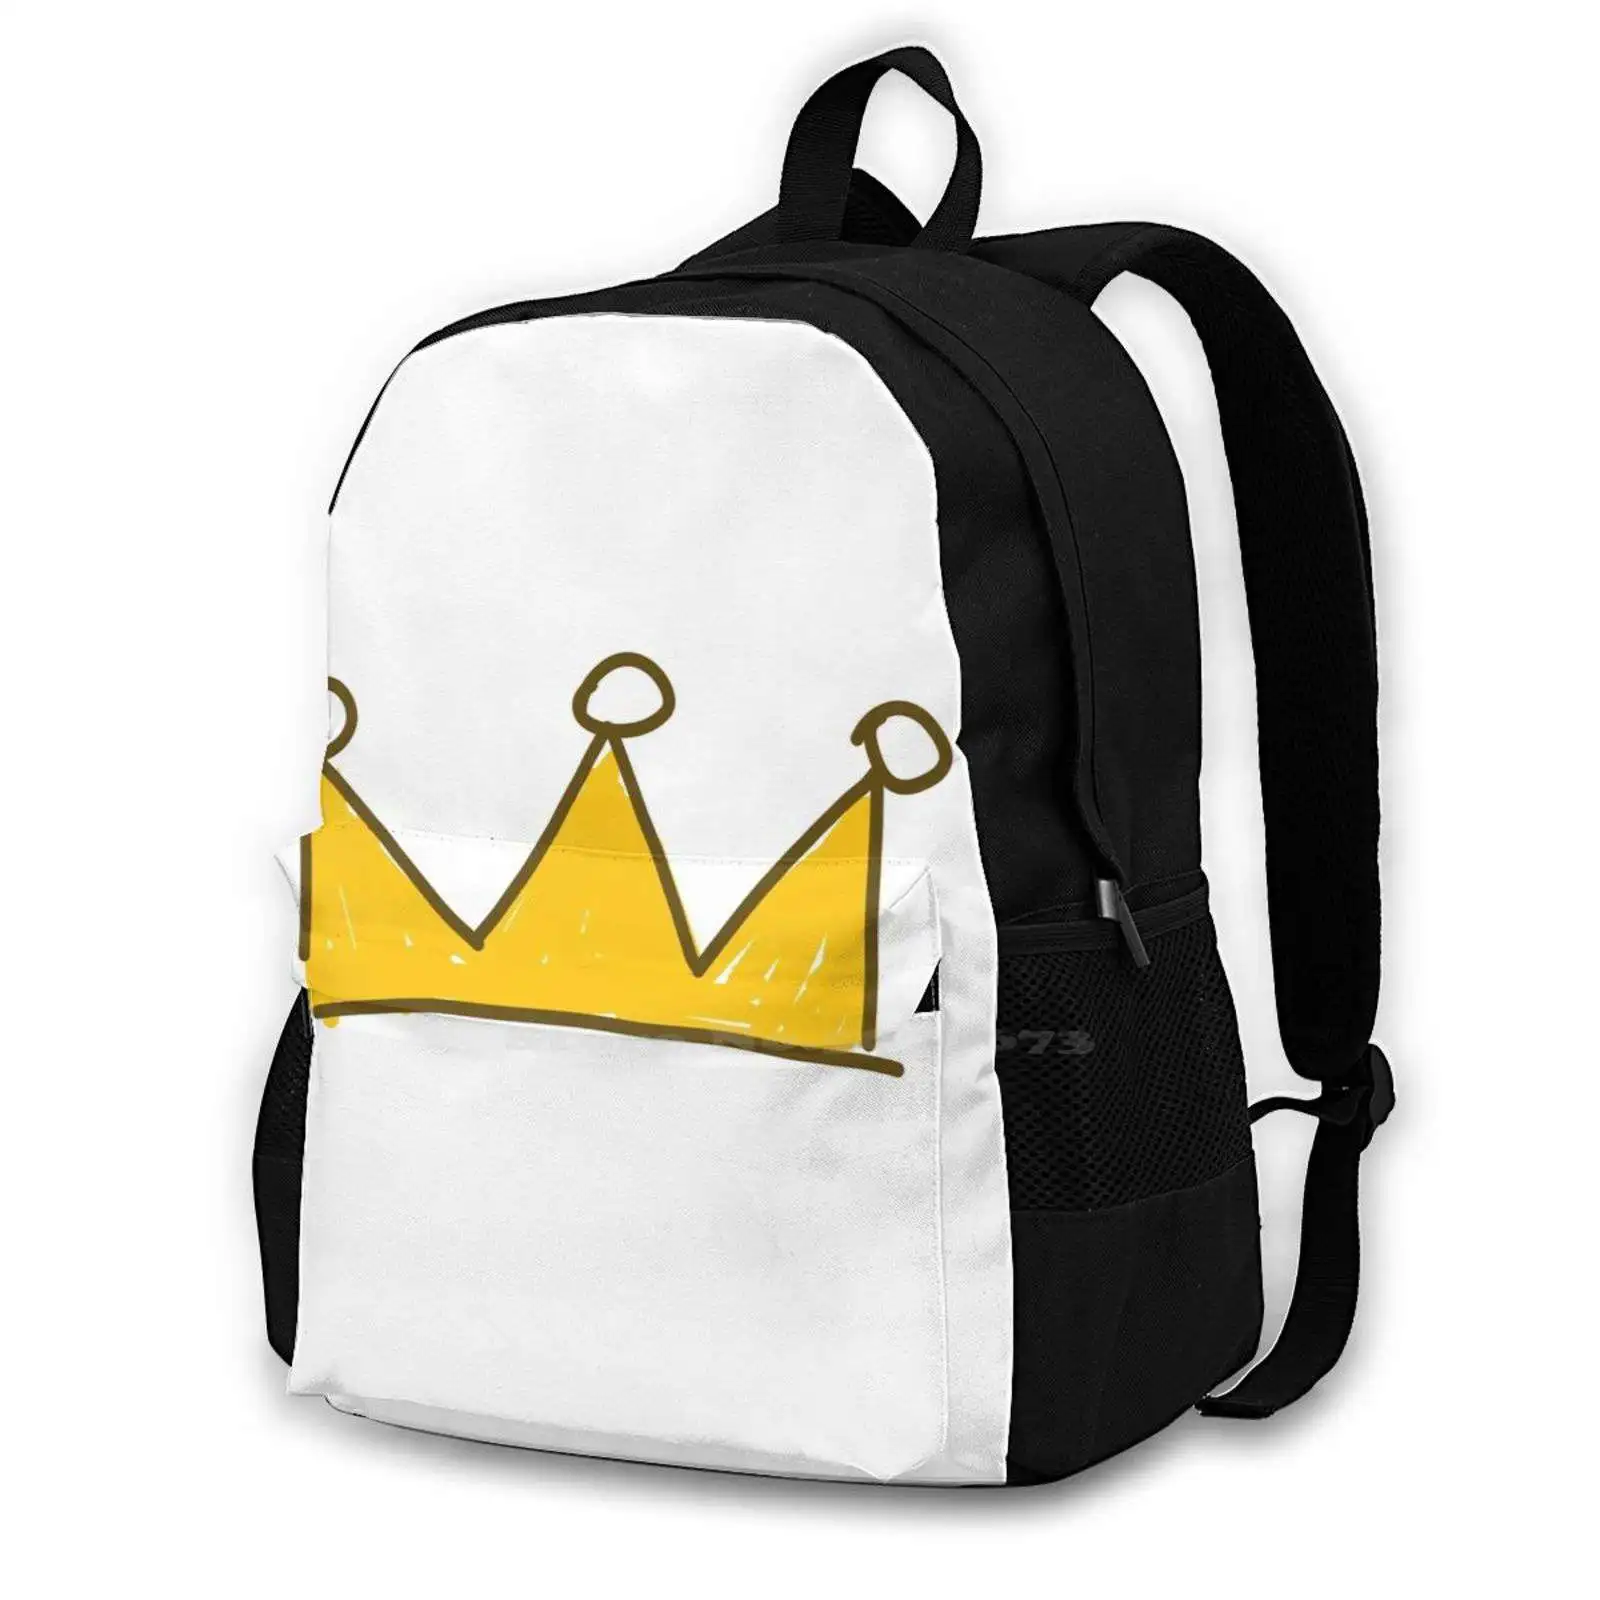 

Crown Rucksack Knapsack Storage Bag Backpack King Noble Queen Crown Kingdom